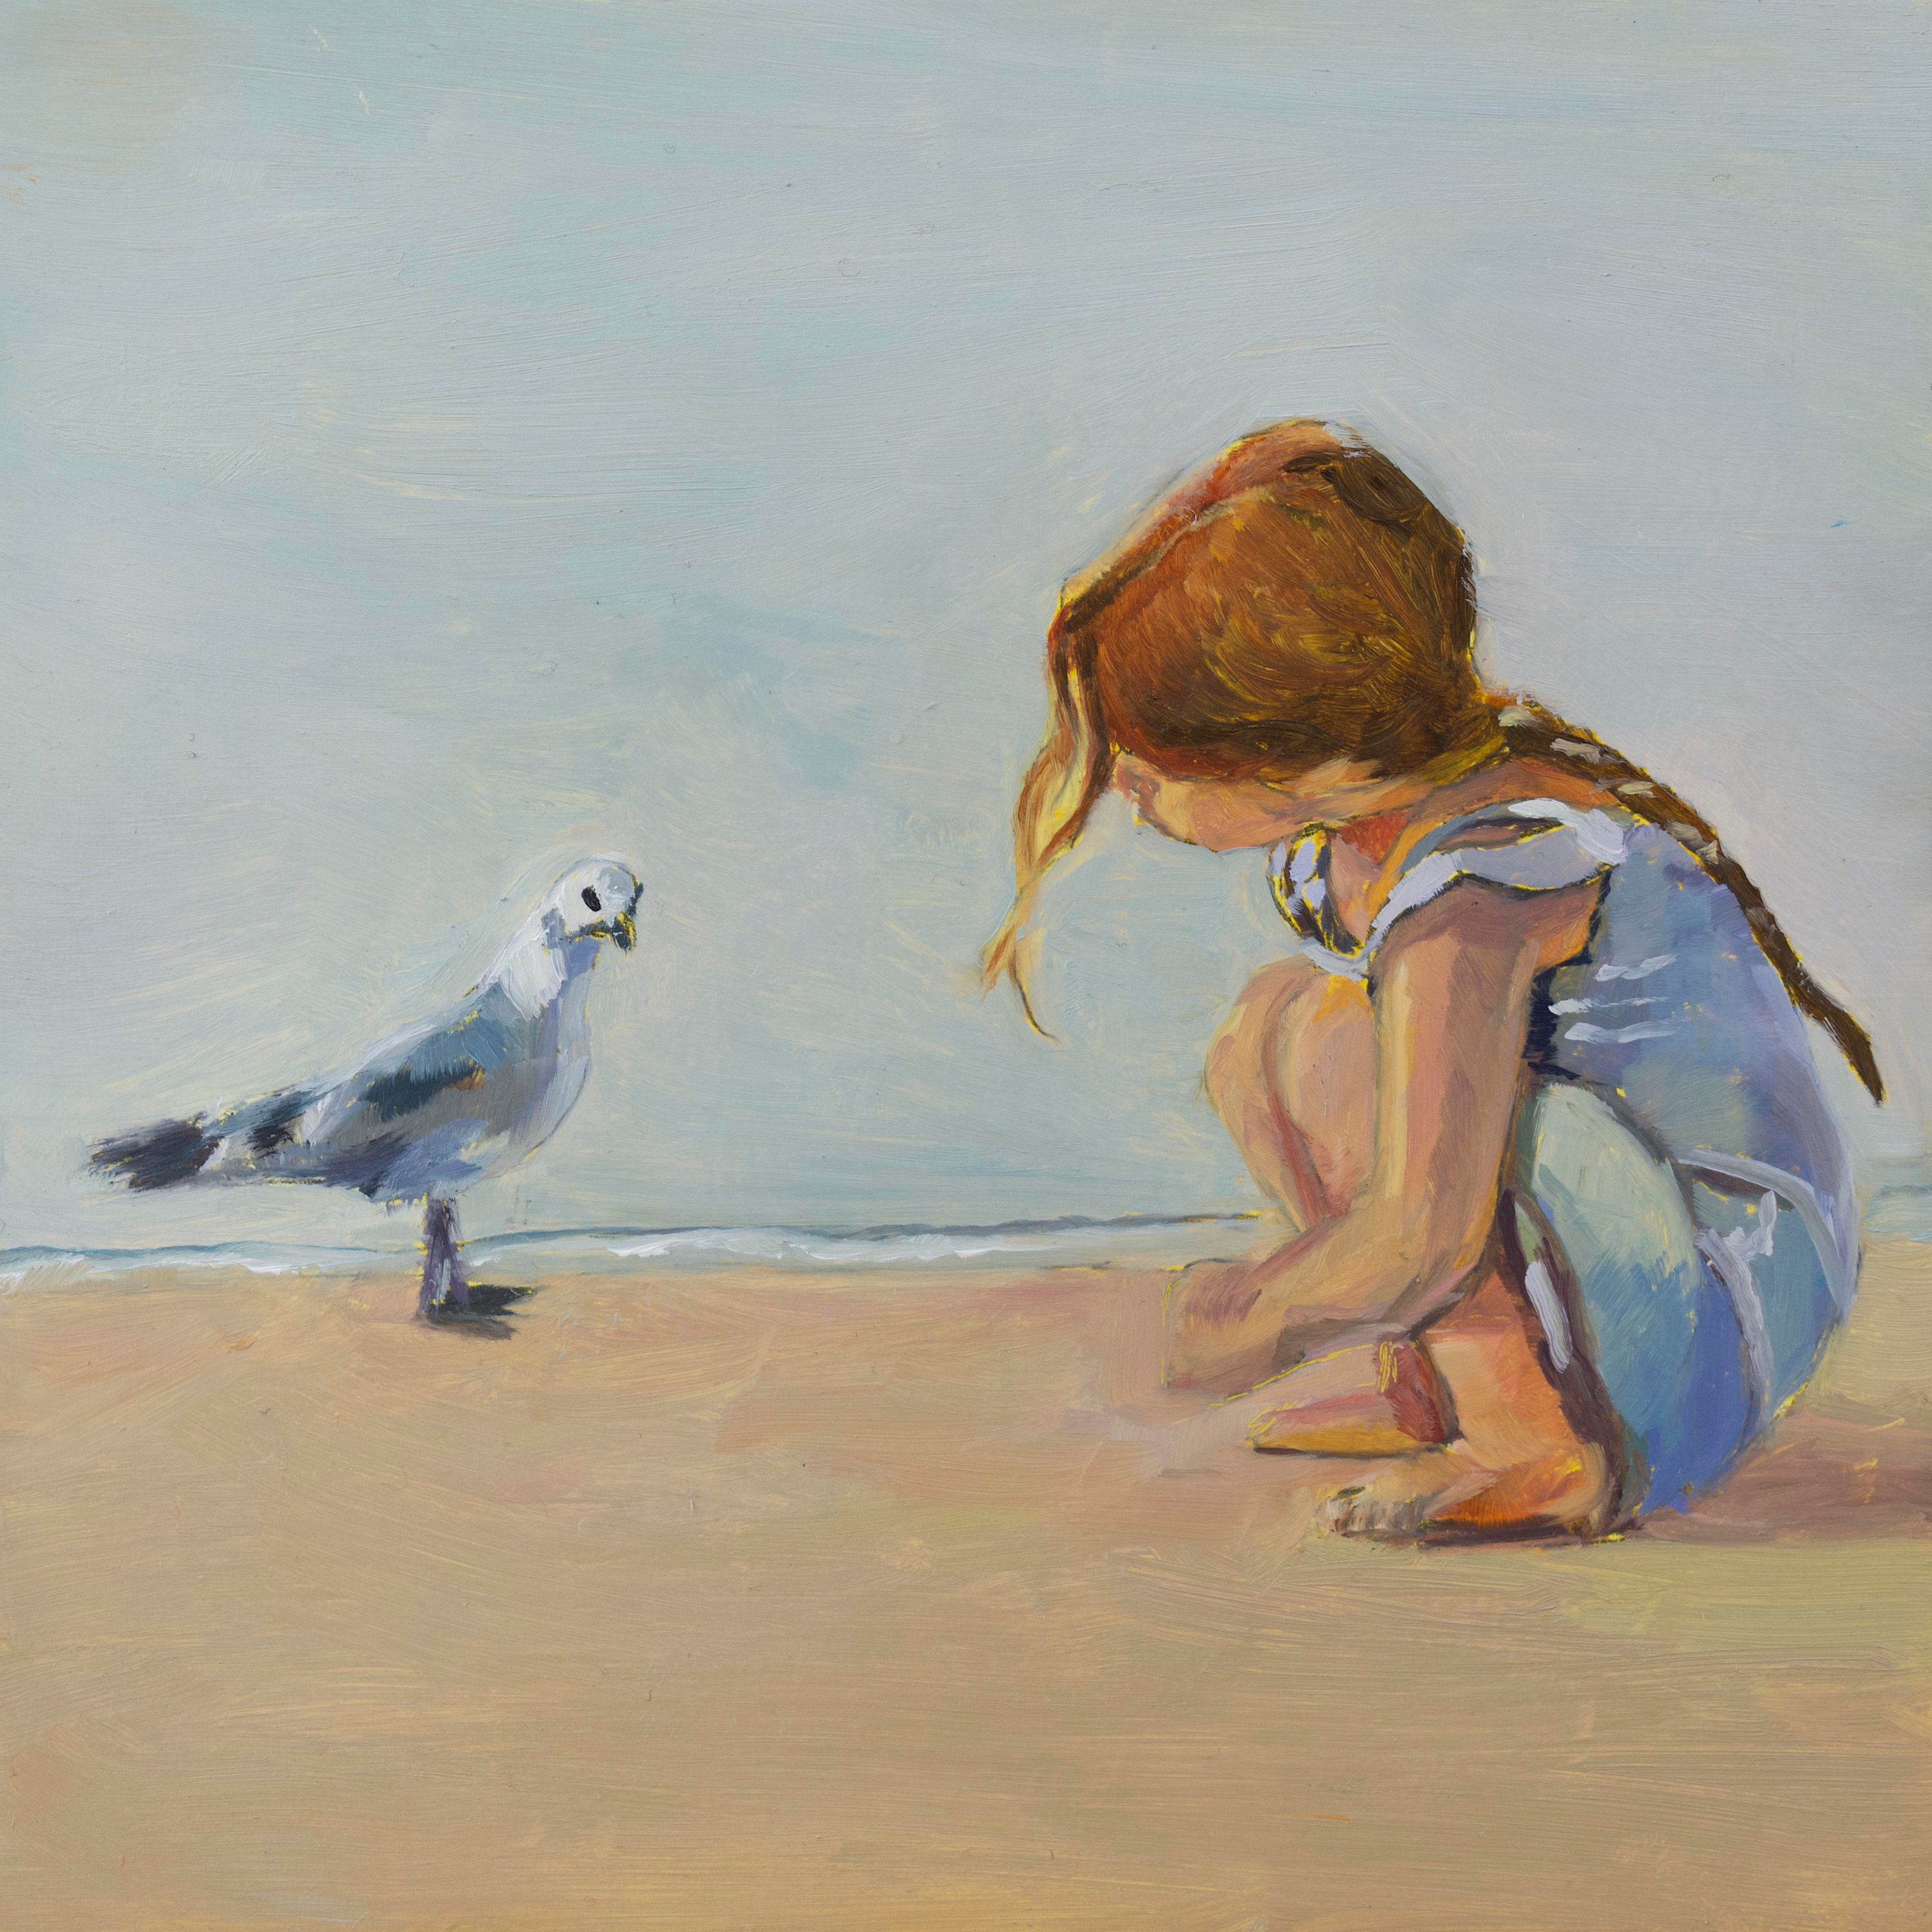 The girl and the ocean beach sand gabriela ortiz bird fhriuq